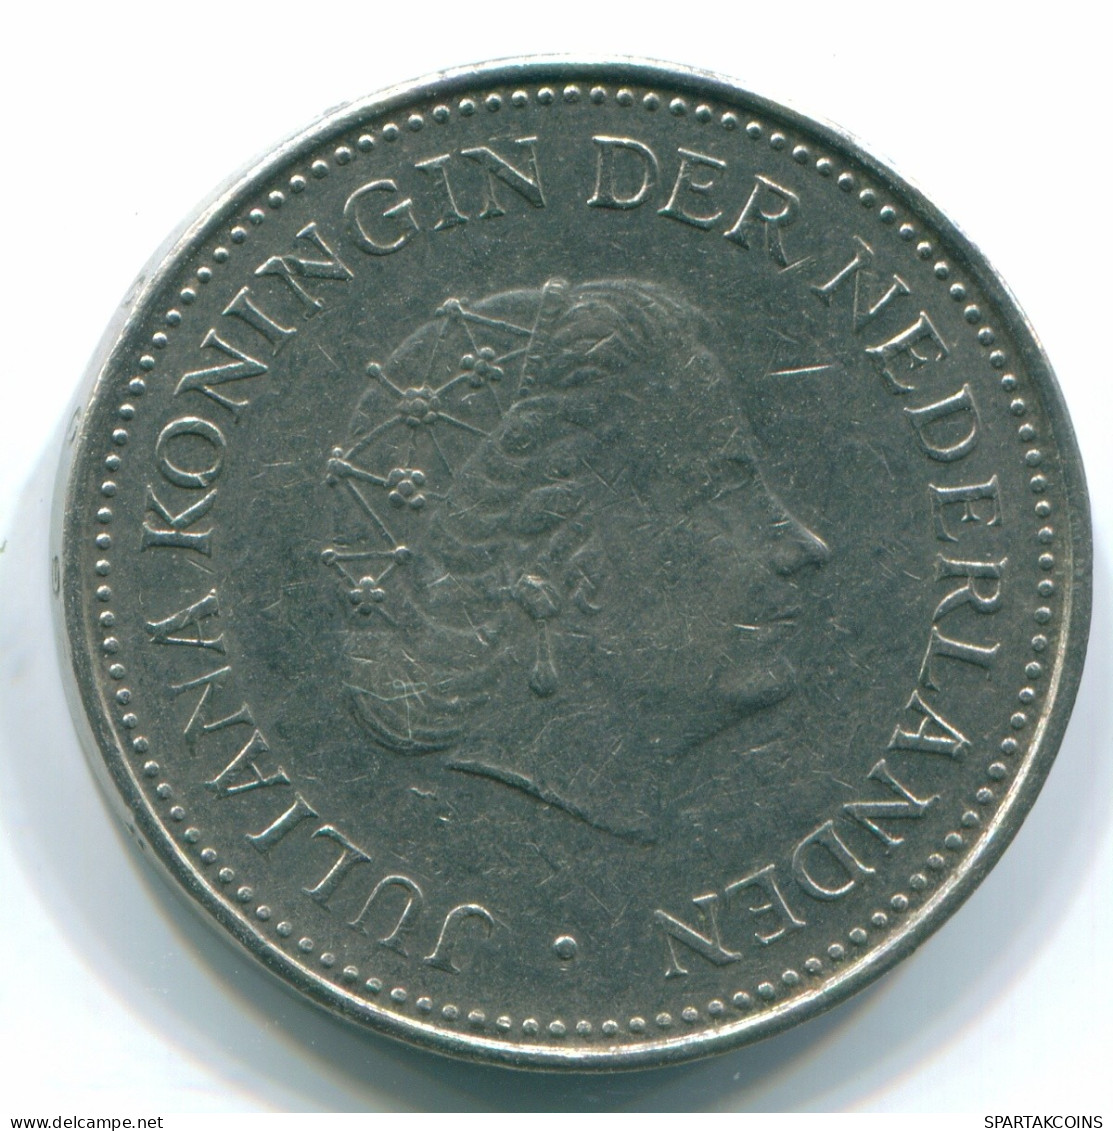 1 GULDEN 1971 ANTILLAS NEERLANDESAS Nickel Colonial Moneda #S12006.E.A - Niederländische Antillen